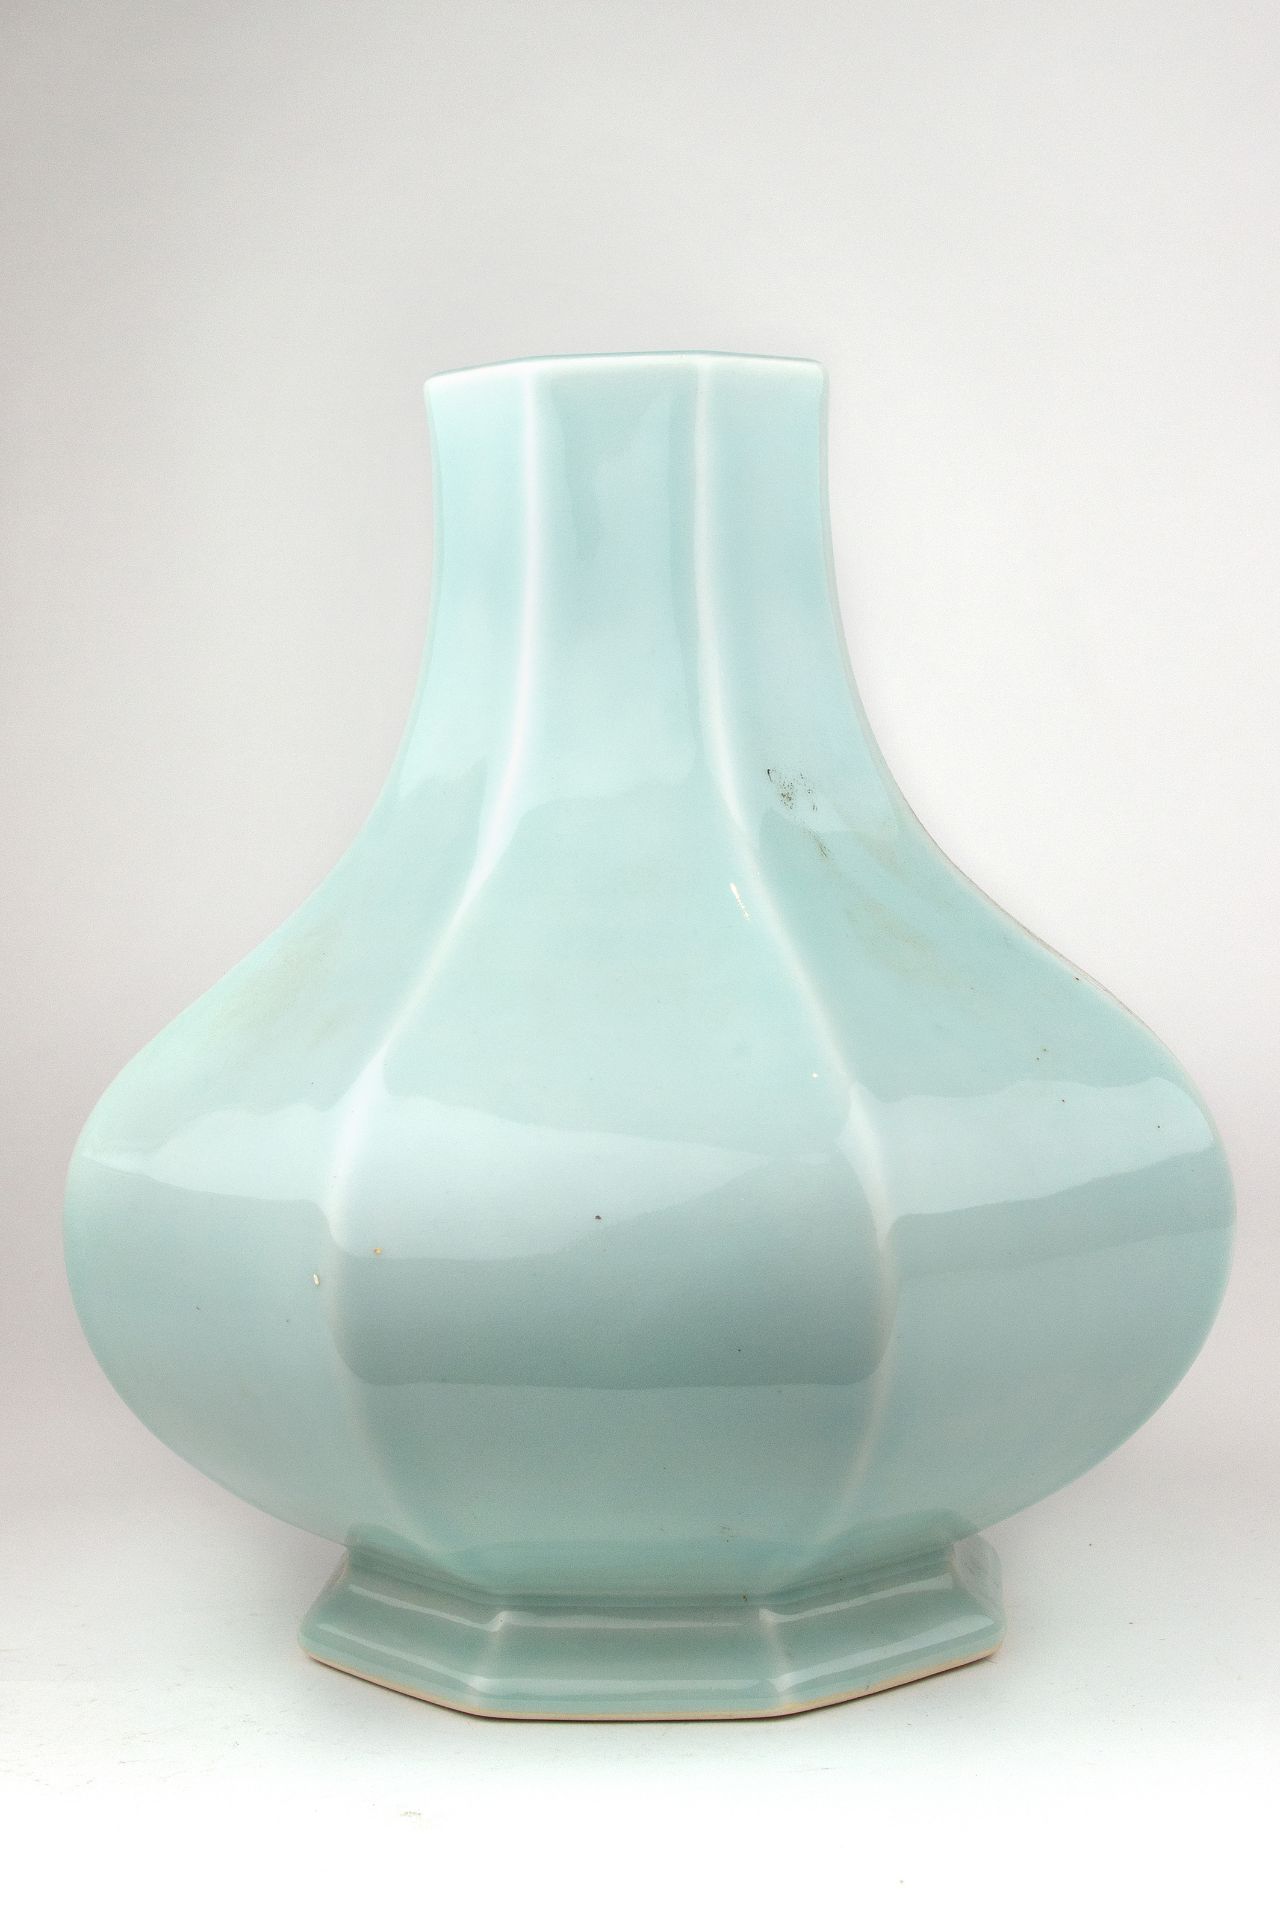 A 20th century Chinese vase in Clair de Lune celadon porcelain